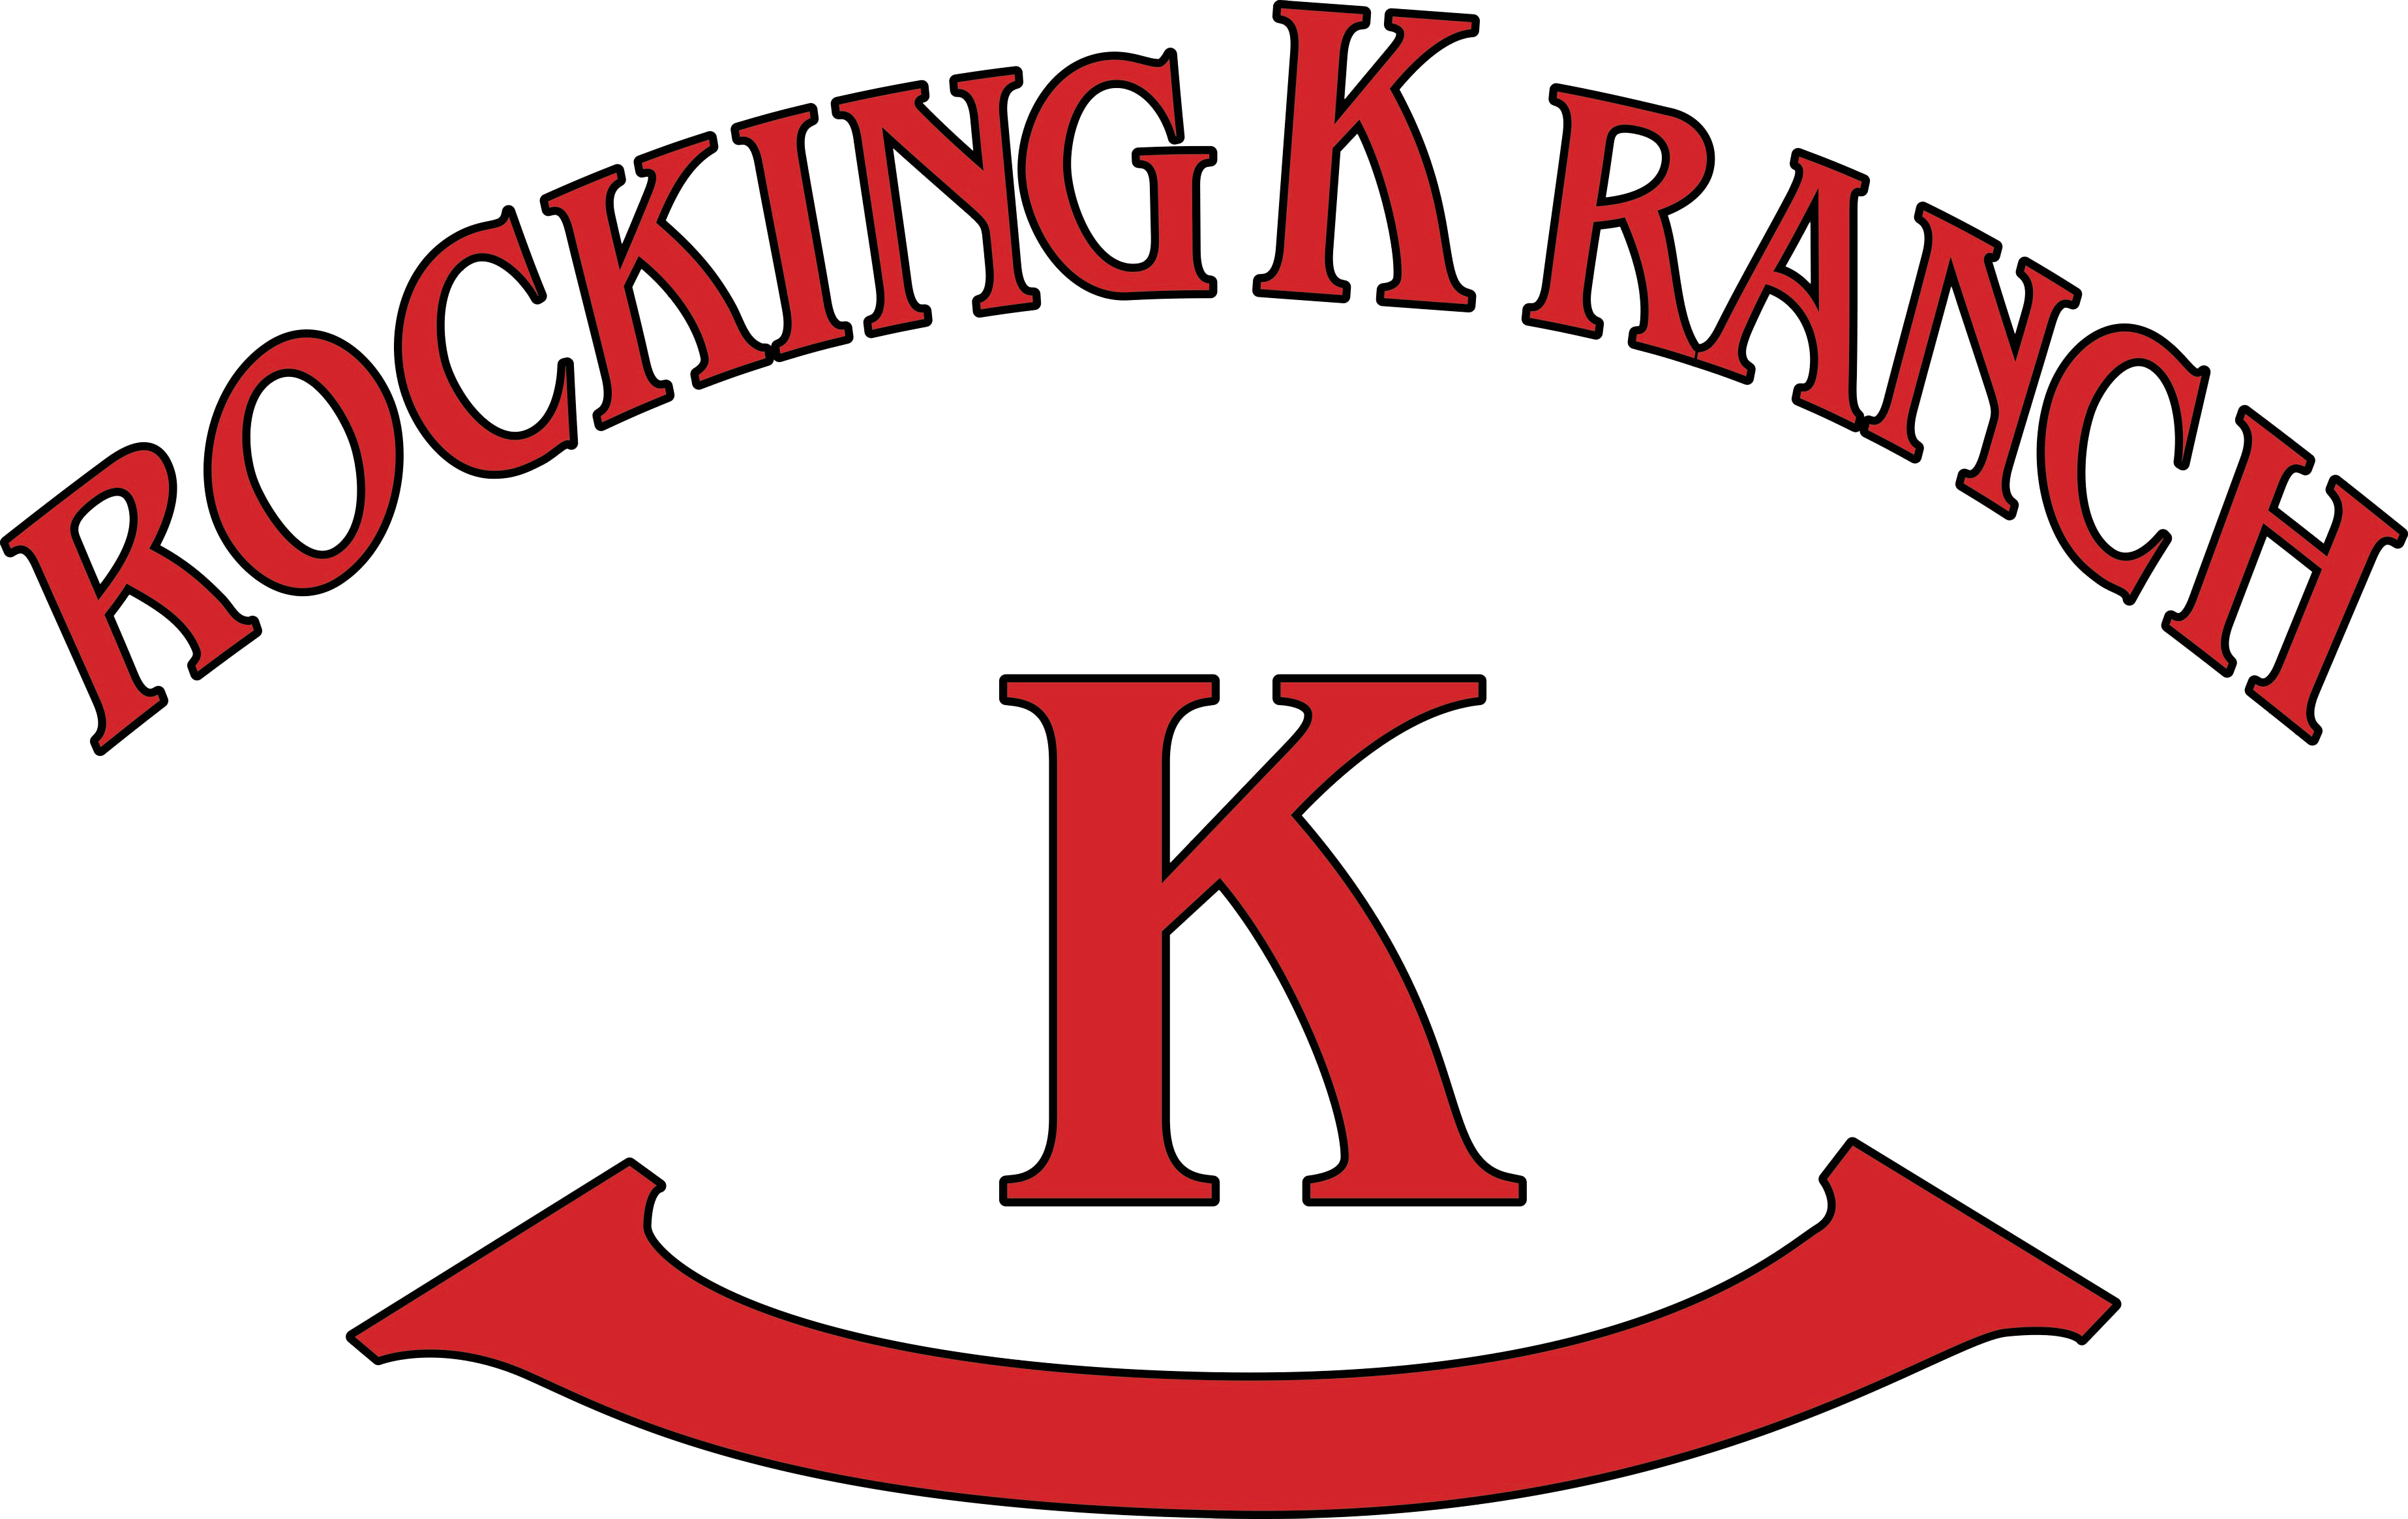 Rocking K Ranch Home